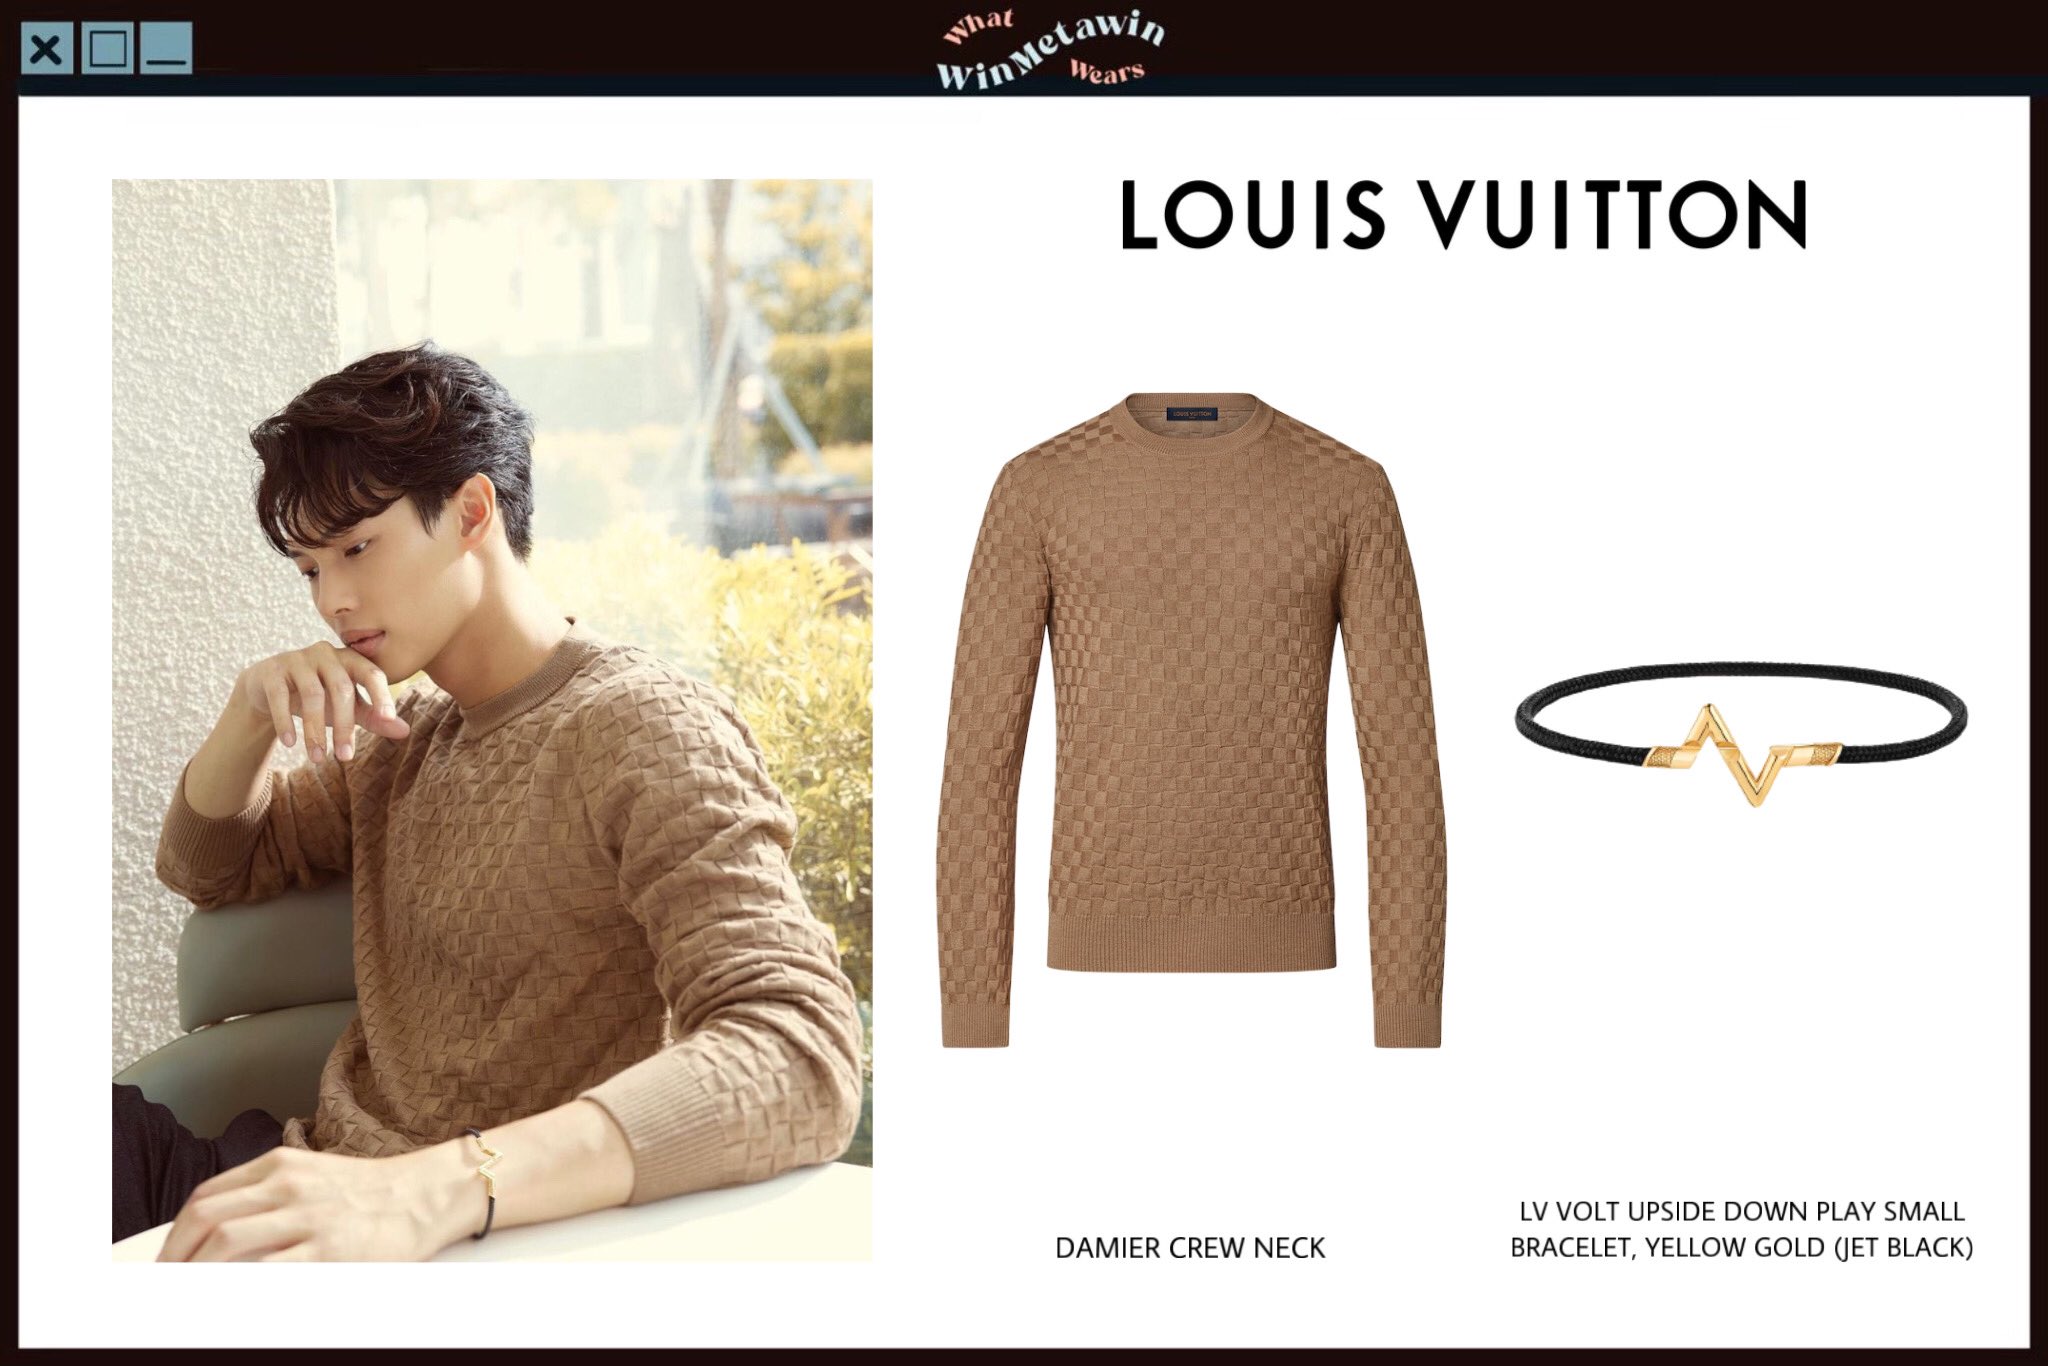 Louis Vuitton LV Volt Upside Down Play Collection